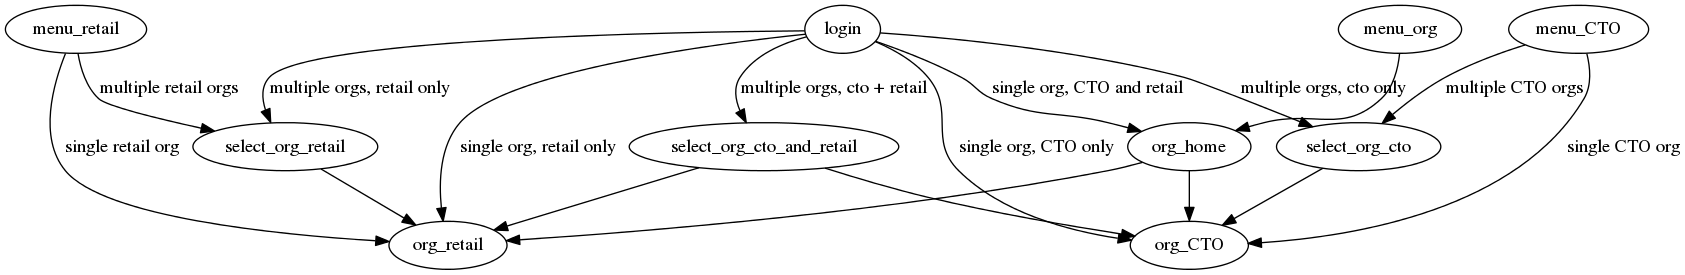 digraph d {
   menu_retail -> org_retail [label="single retail org"];
   menu_retail -> select_org_retail [label="multiple retail orgs"];
   menu_CTO -> org_CTO [label="single CTO org"];
   menu_CTO -> select_org_cto [label="multiple CTO orgs"];
   menu_org -> org_home;
   org_home -> org_CTO;
   org_home -> org_retail;
   select_org_cto;
   select_org_retail;
   select_org_cto_and_retail;
   login;
   login -> select_org_cto_and_retail [label="multiple orgs, cto + retail"];
   select_org_cto_and_retail ->  org_retail;
   select_org_cto_and_retail ->  org_CTO;
   login -> select_org_cto [label="multiple orgs, cto only"];
   select_org_cto ->  org_CTO;
   login -> select_org_retail [label="multiple orgs, retail only"];
   select_org_retail ->  org_retail;
   login -> org_retail [label="single org, retail only"];
   login -> org_CTO [label="single org, CTO only"];
   login -> org_home [label="single org, CTO and retail"];
}